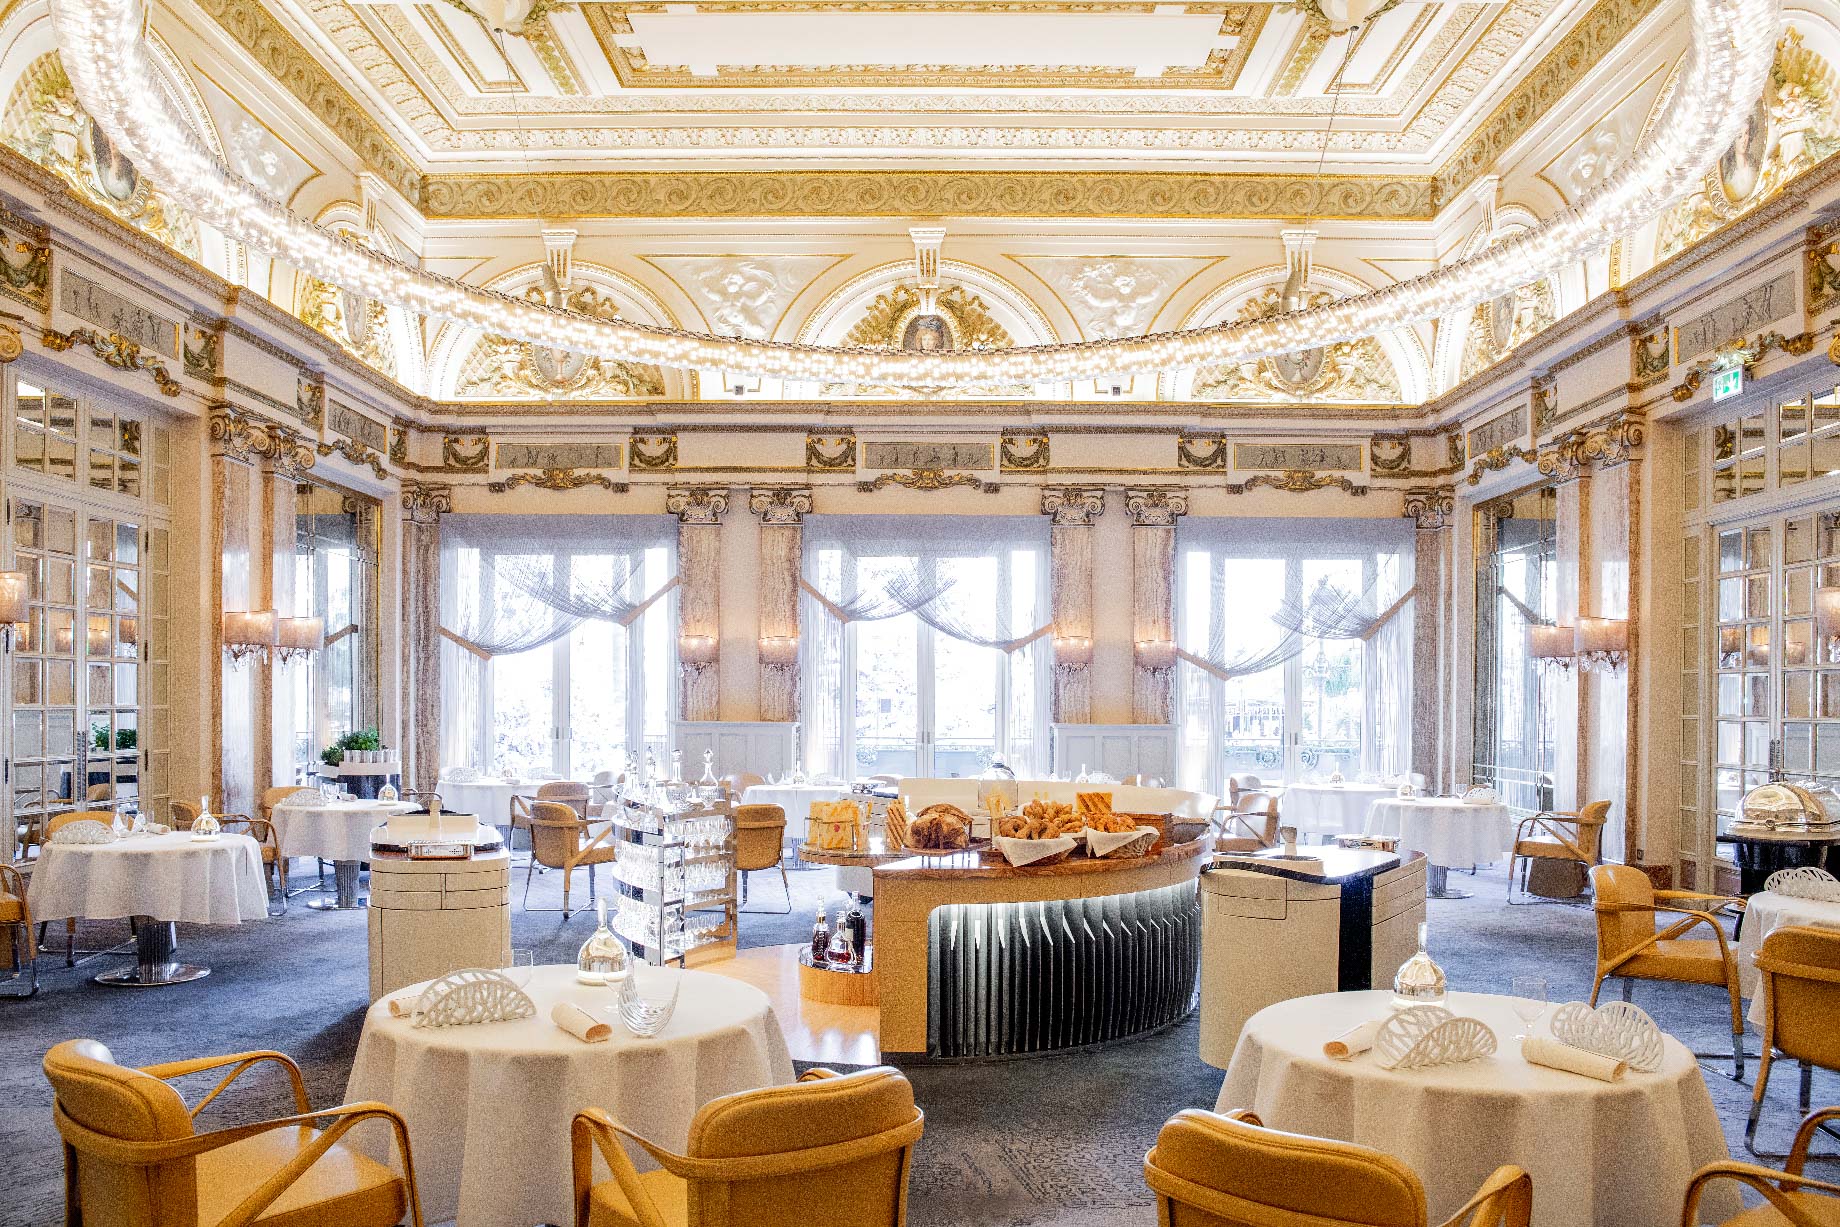 Discover Five of The Best Things to Do in Monaco in Winter - Le Louis XV - Alain Ducasse à l'Hôtel de Paris Restaurant